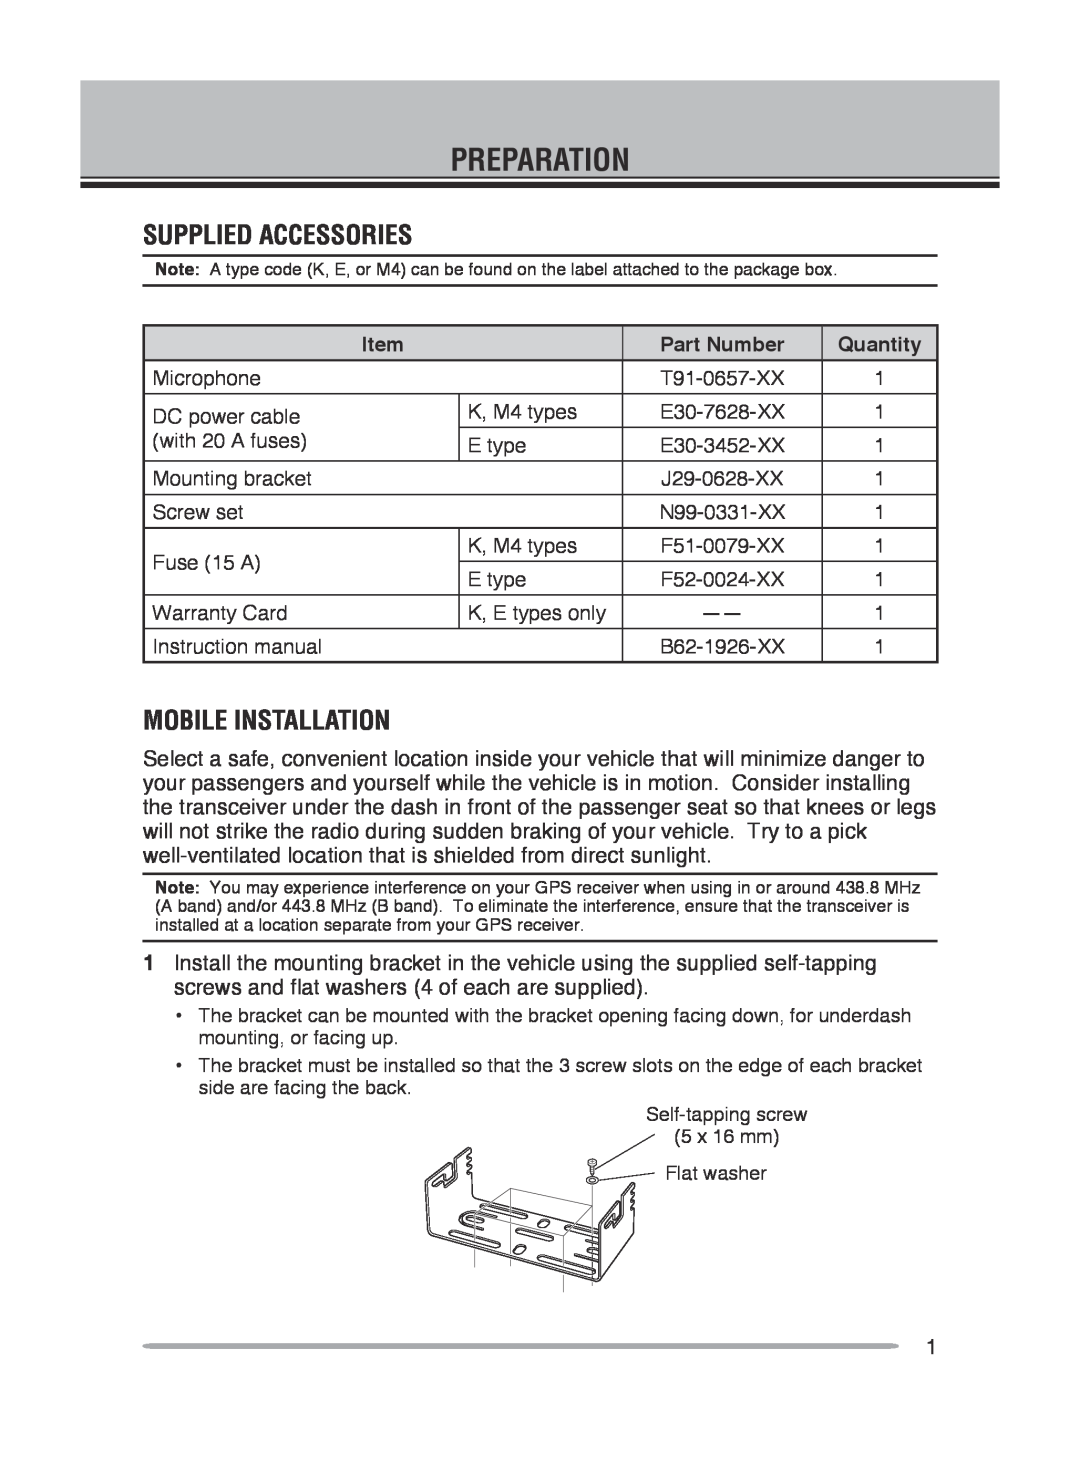 Kenwood TM-V71A, TM-V71E instruction manual Preparation, Supplied Accessories, Mobile Installation 